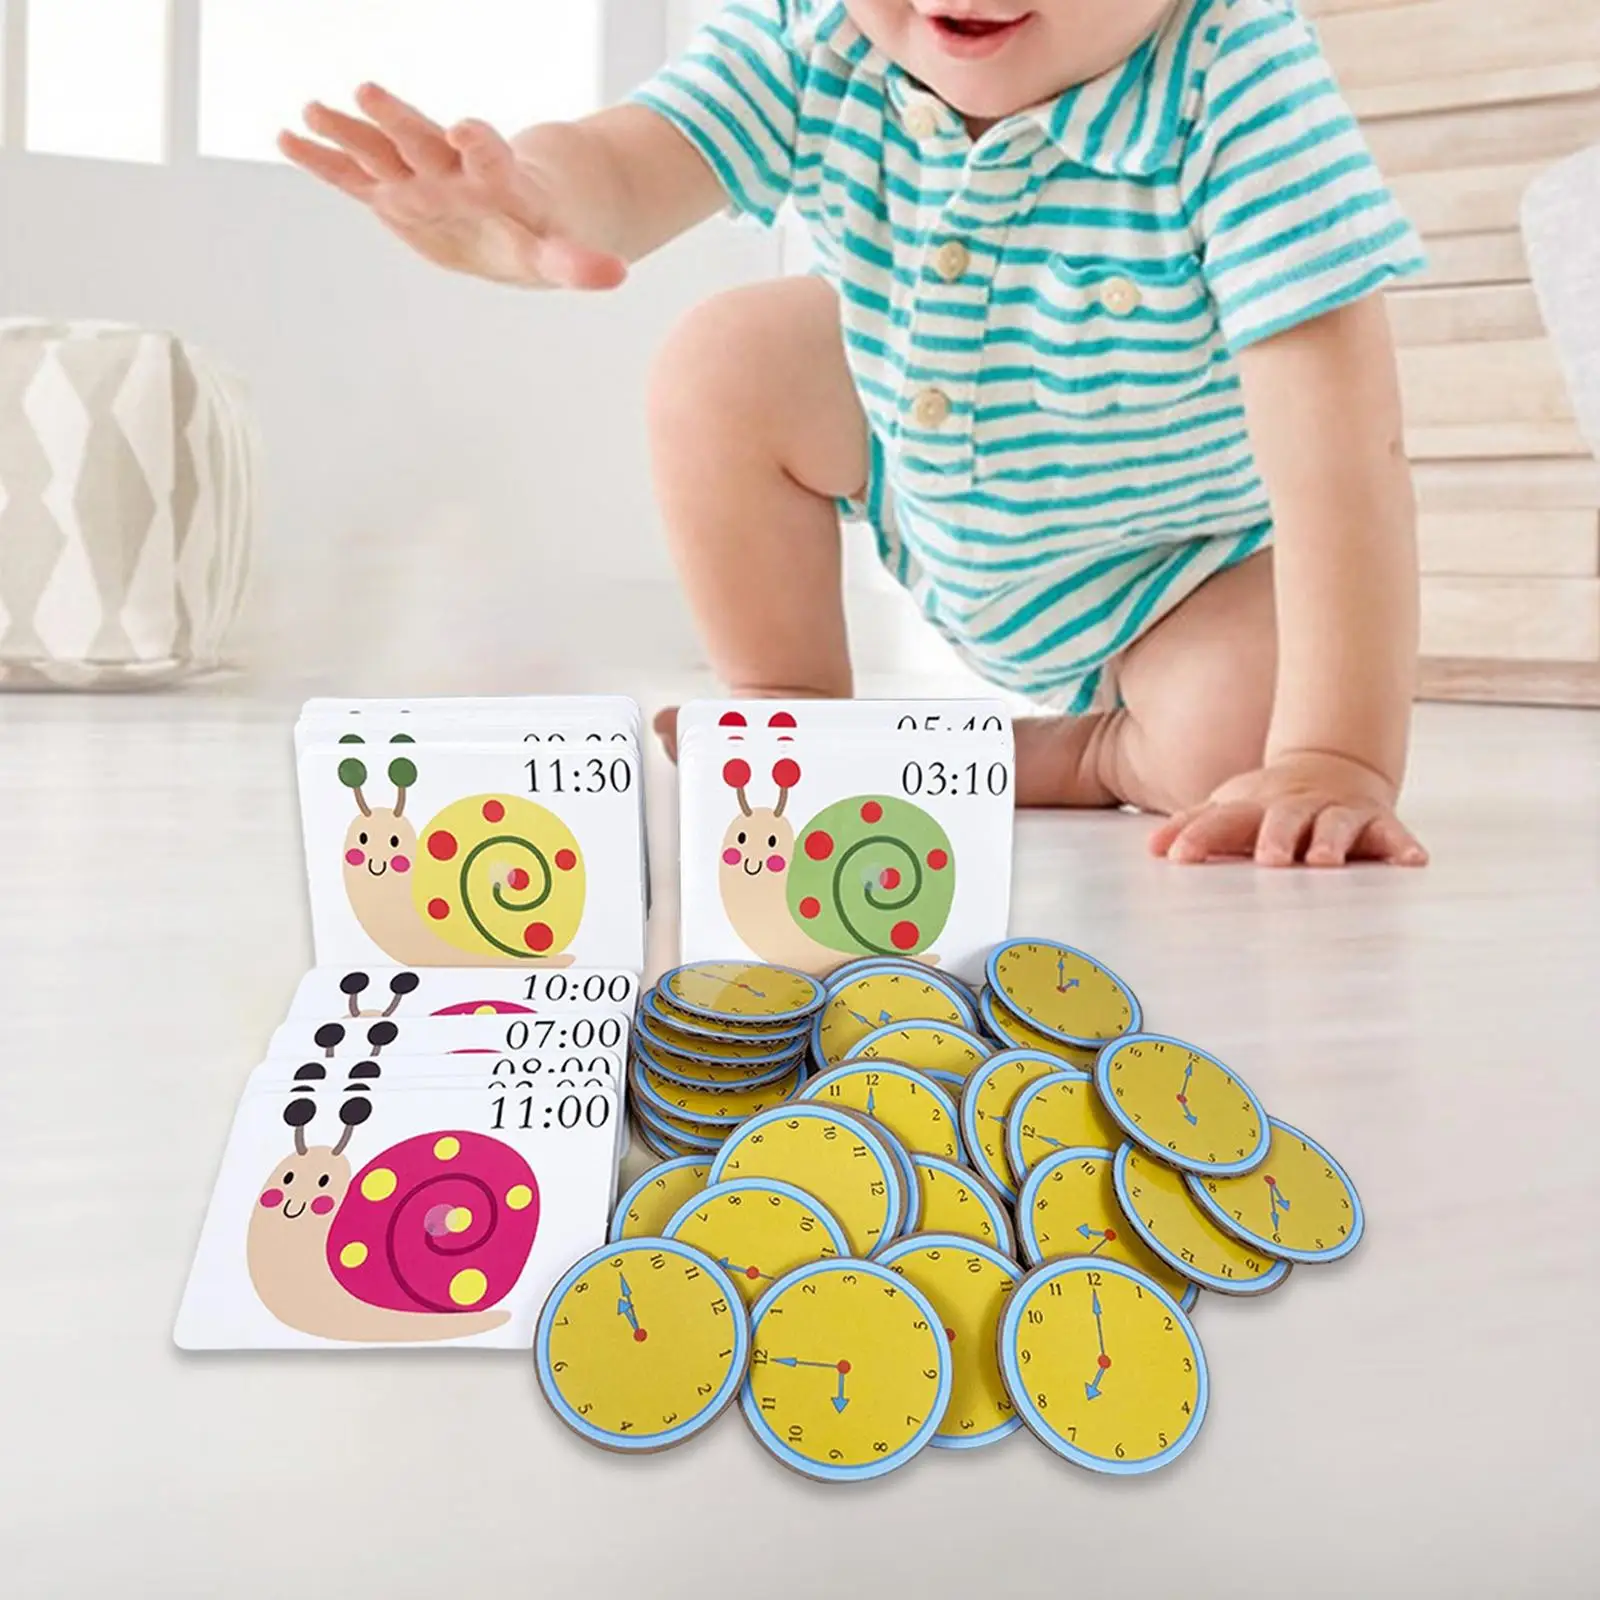 Montessori Teaching Clock Cards Educational Toy Time Learning Tool Preschool